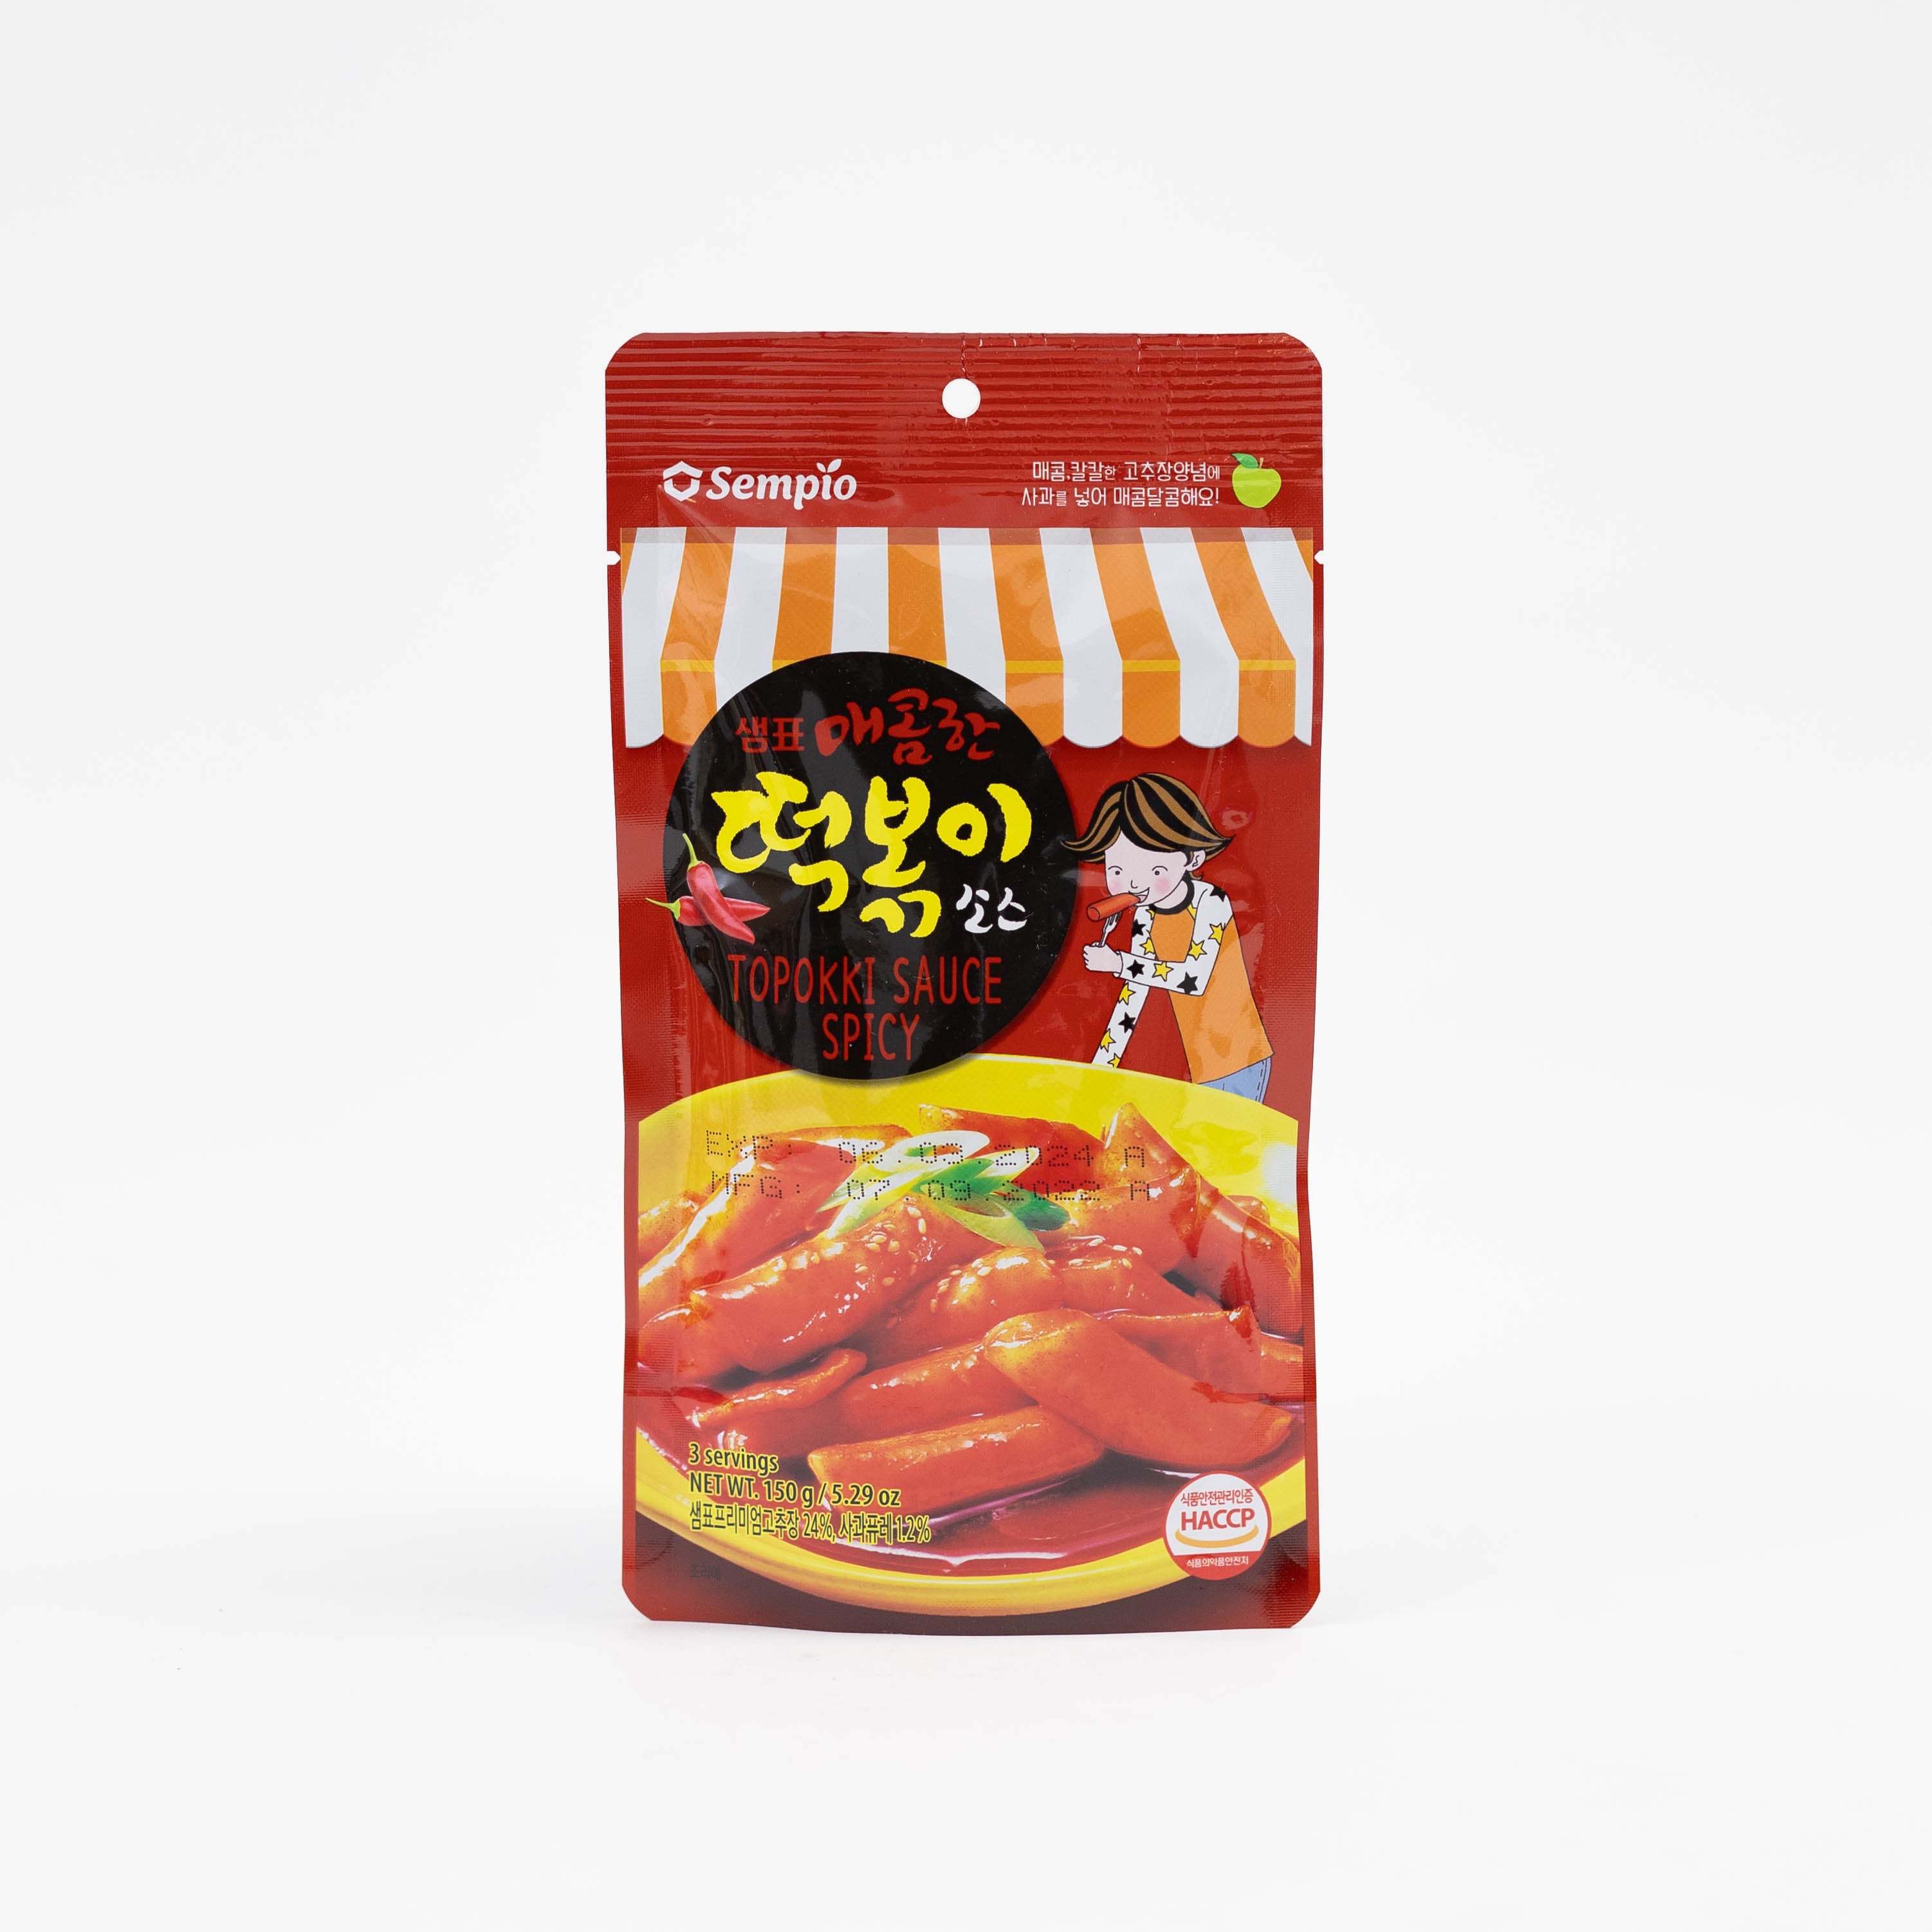 onlineshop dinese.de asiashop sempio topokki sauce spicy scharf asiatische lebensmittel